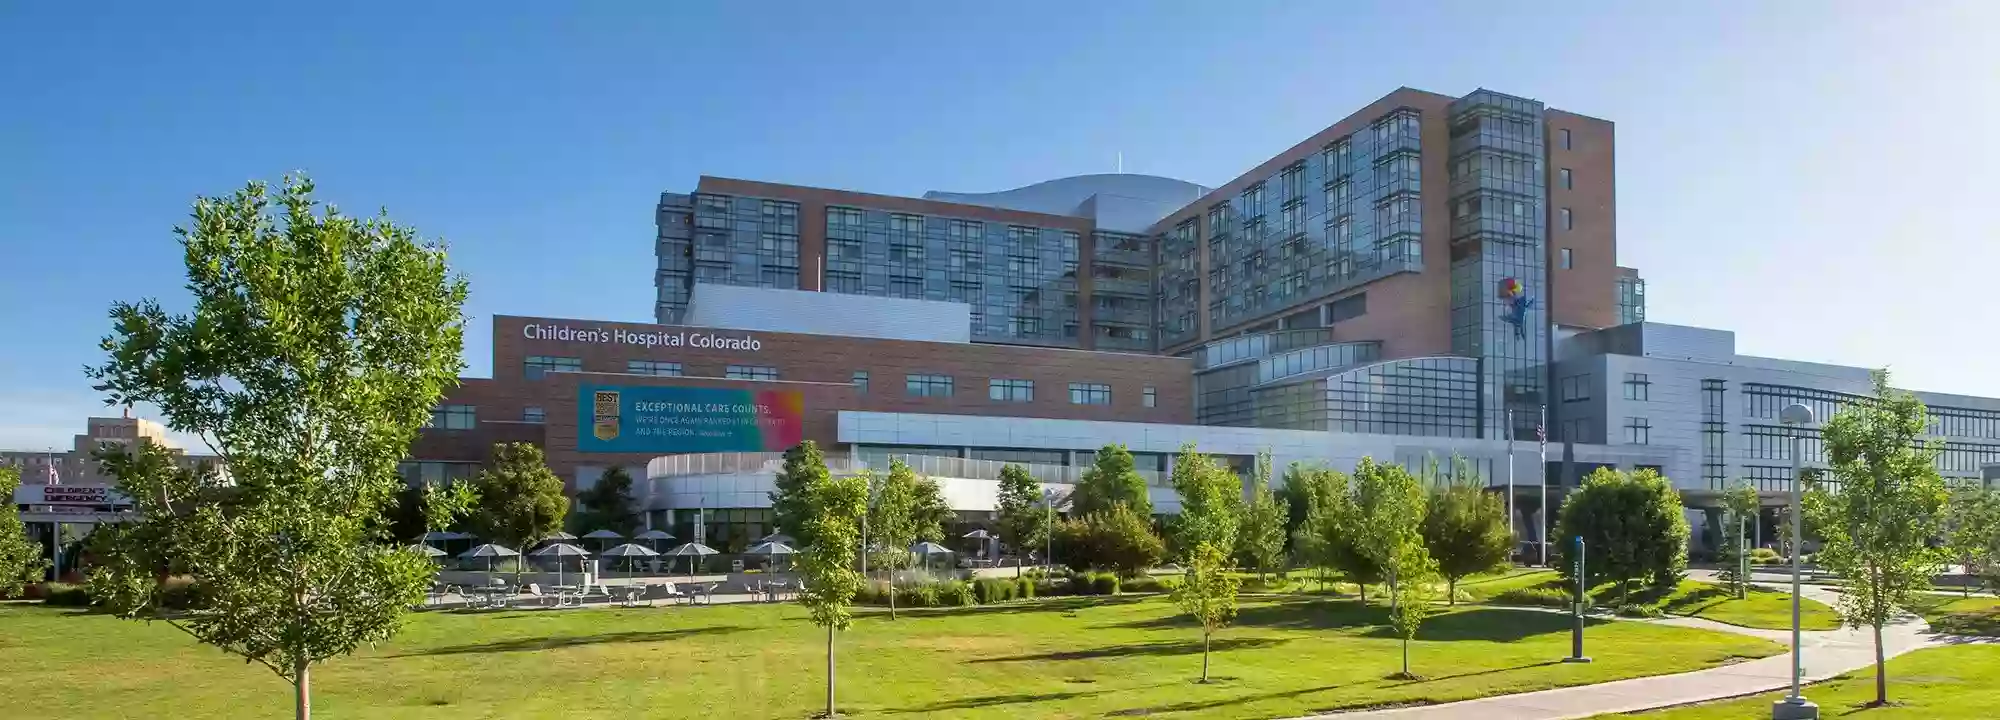 Children's Hospital Colorado Anschutz Medical Campus, Aurora